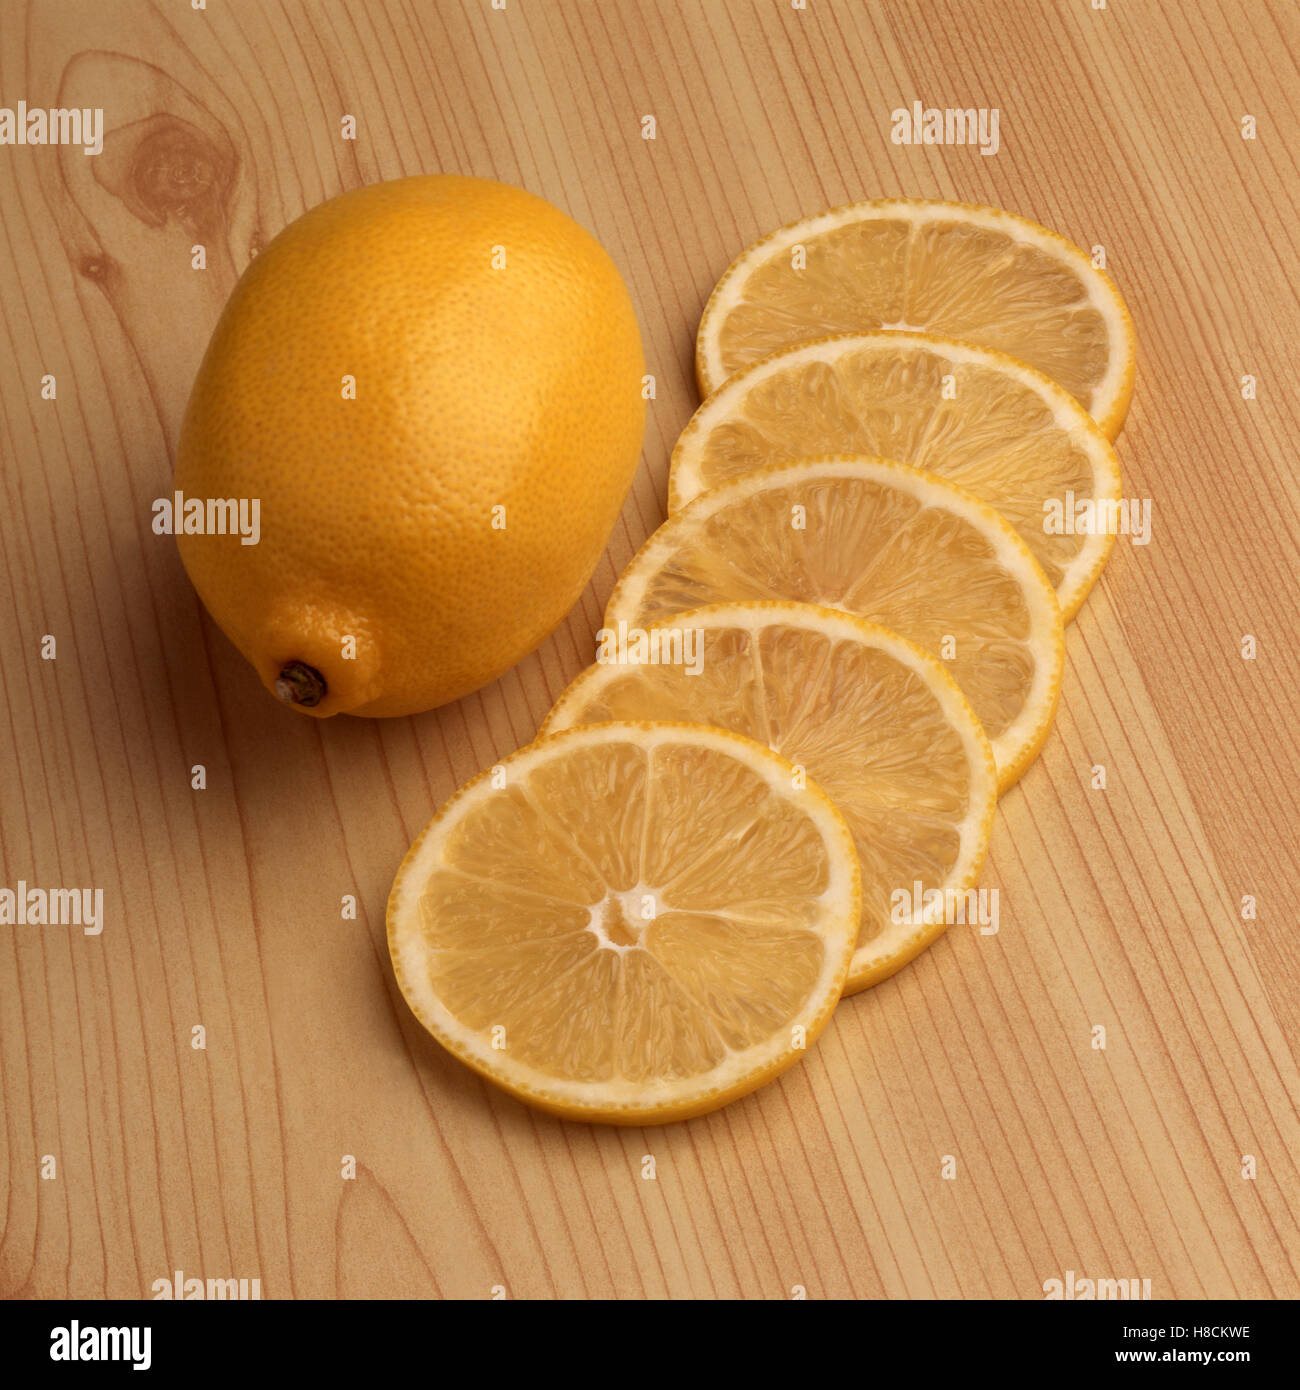 Lemon and five slices Stock Photo